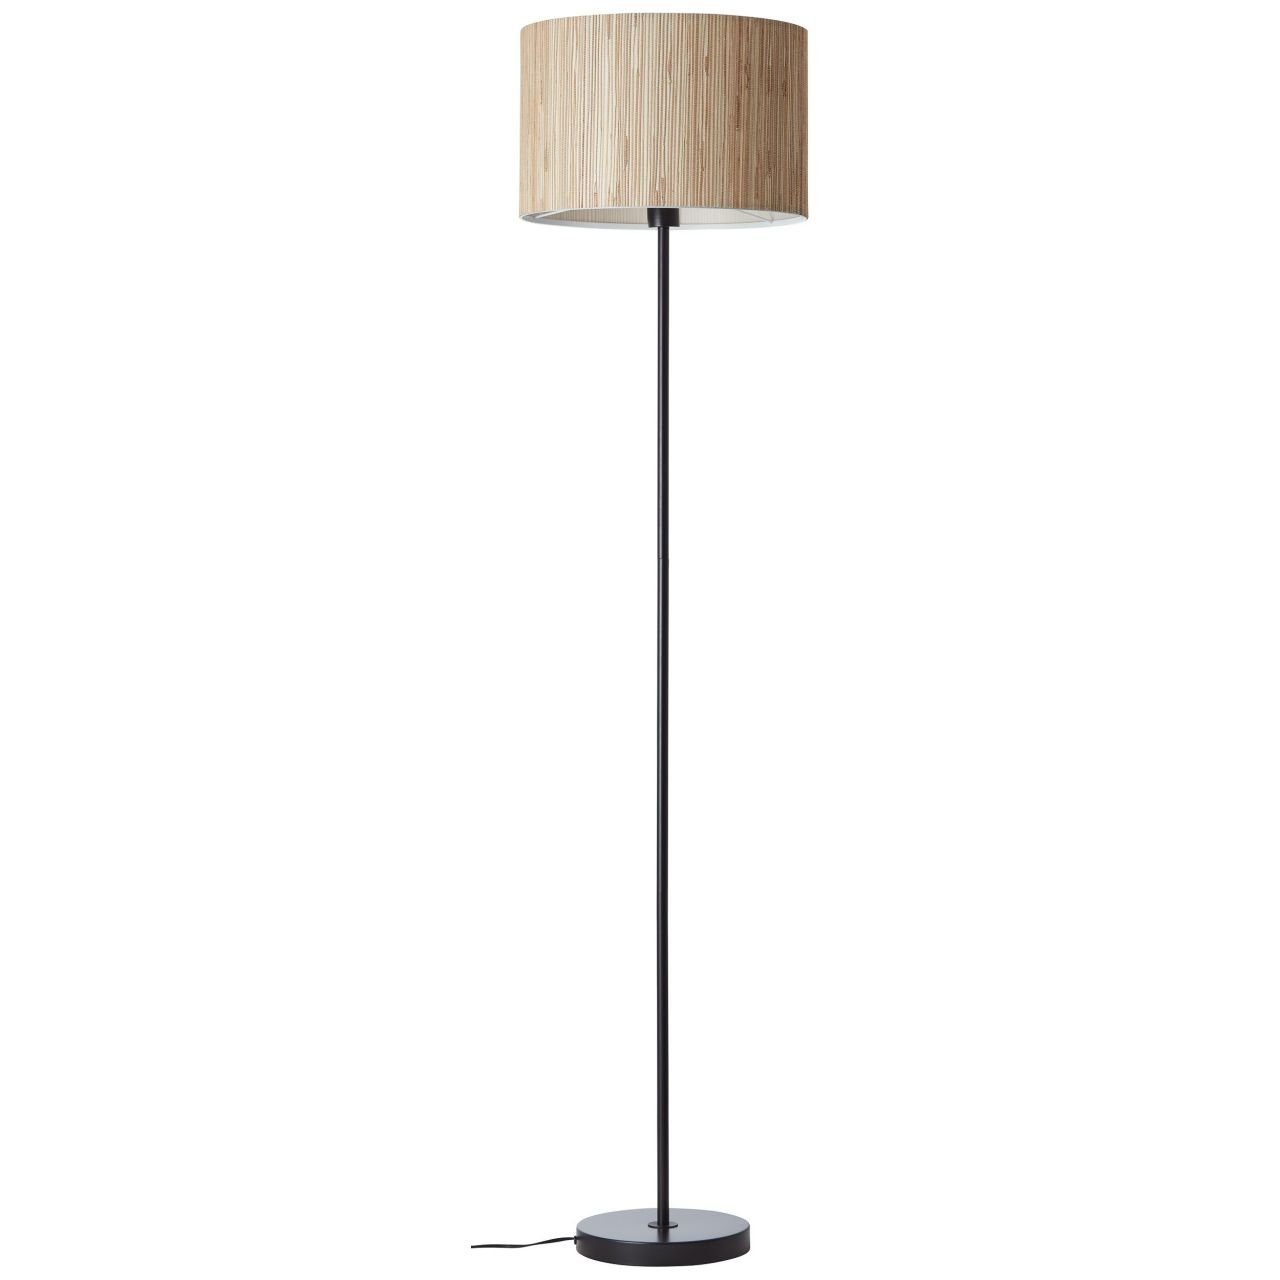 Brilliant Stehlampe Wimea, 52W, Fußscha schwarz/natur, Standleuchte E27, A60, Lampe, Wimea Mit 1x